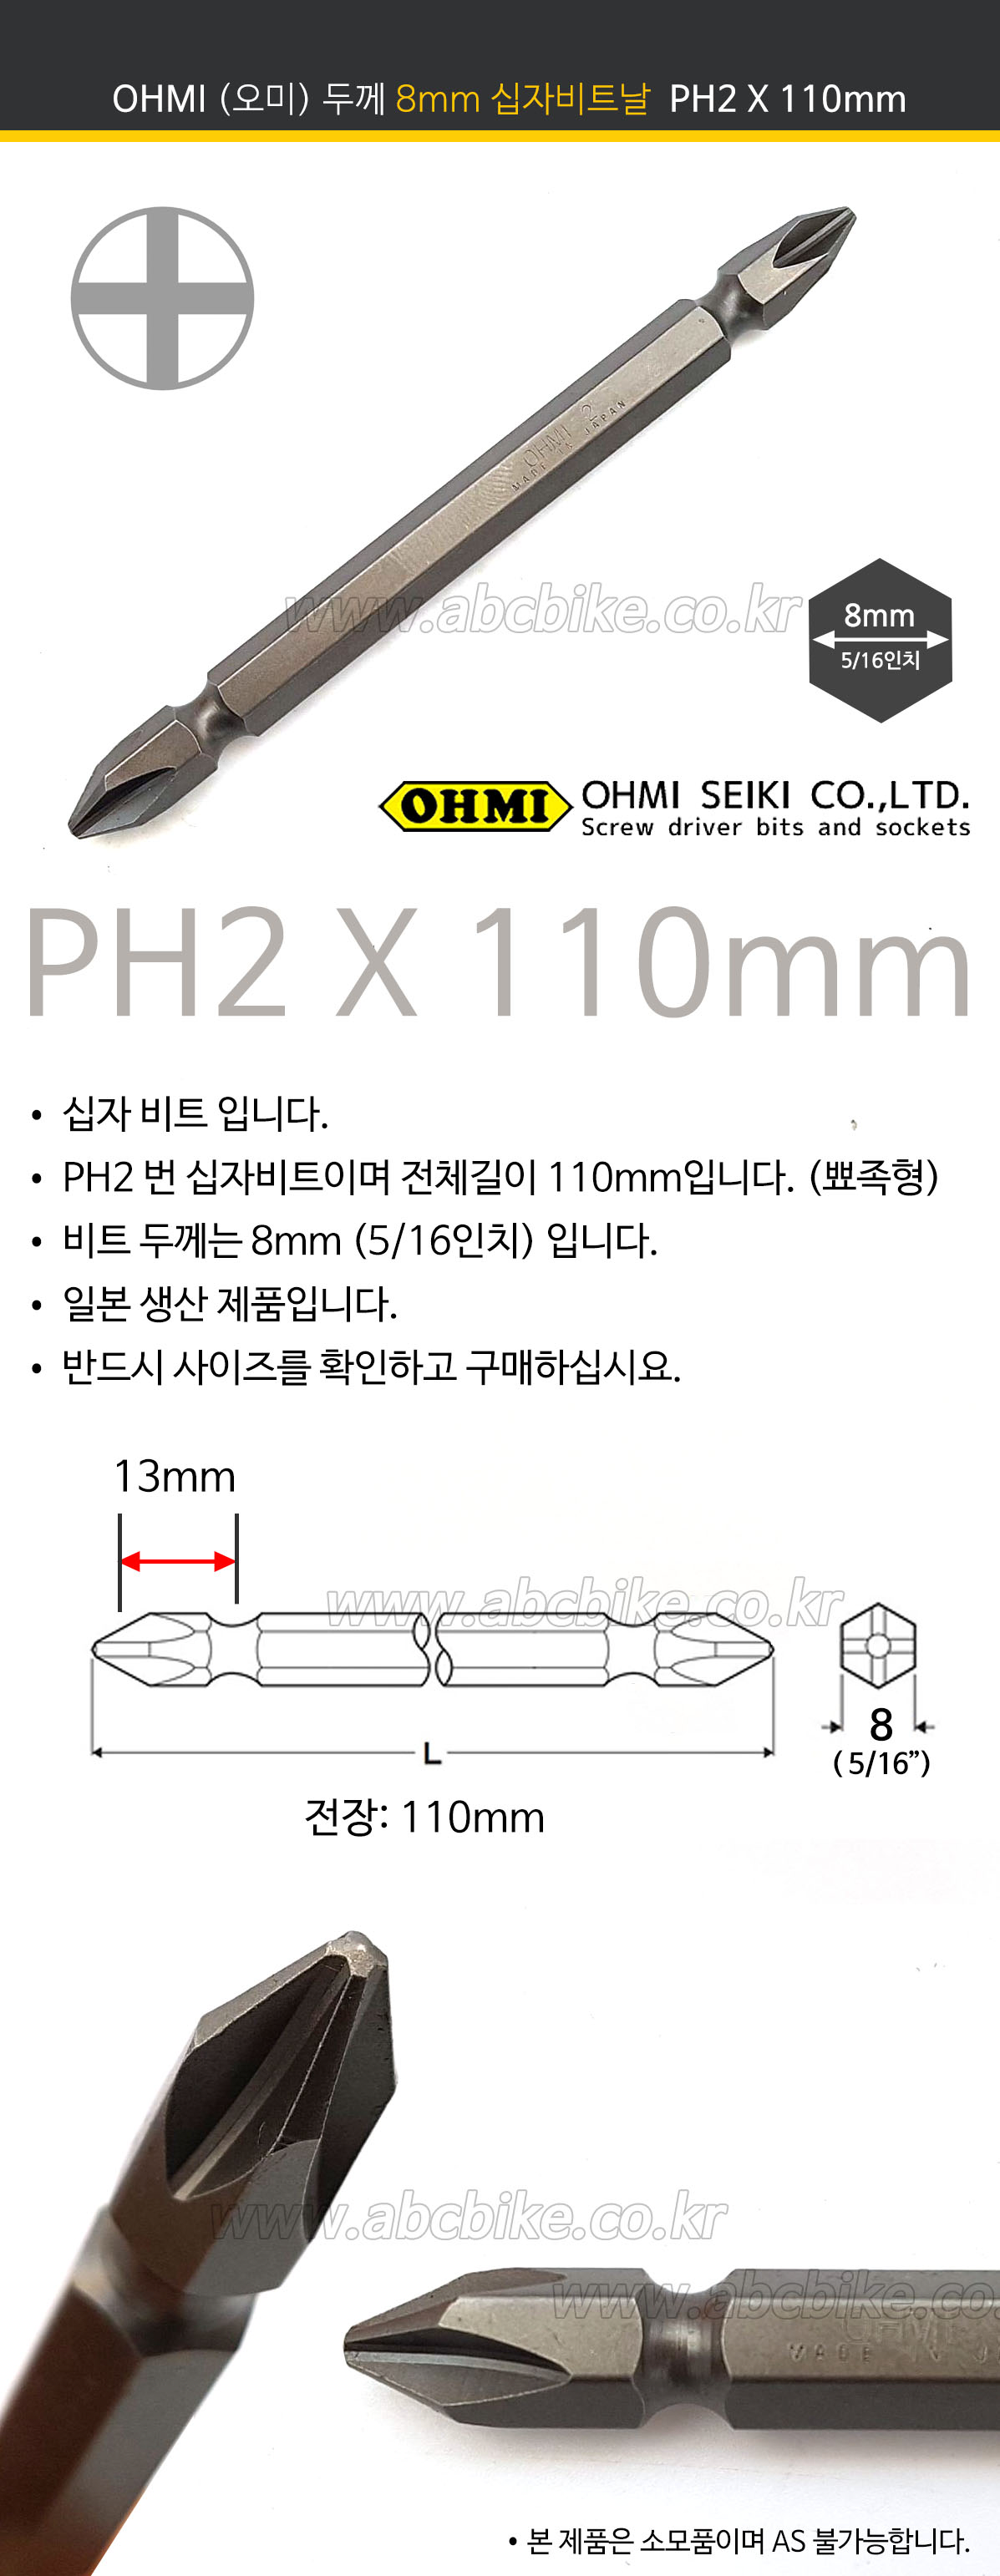 EIGHT (에이트) (6.35mm) 비트날  PH2 X 65mm (뭉툭형) 쵸크날 비트